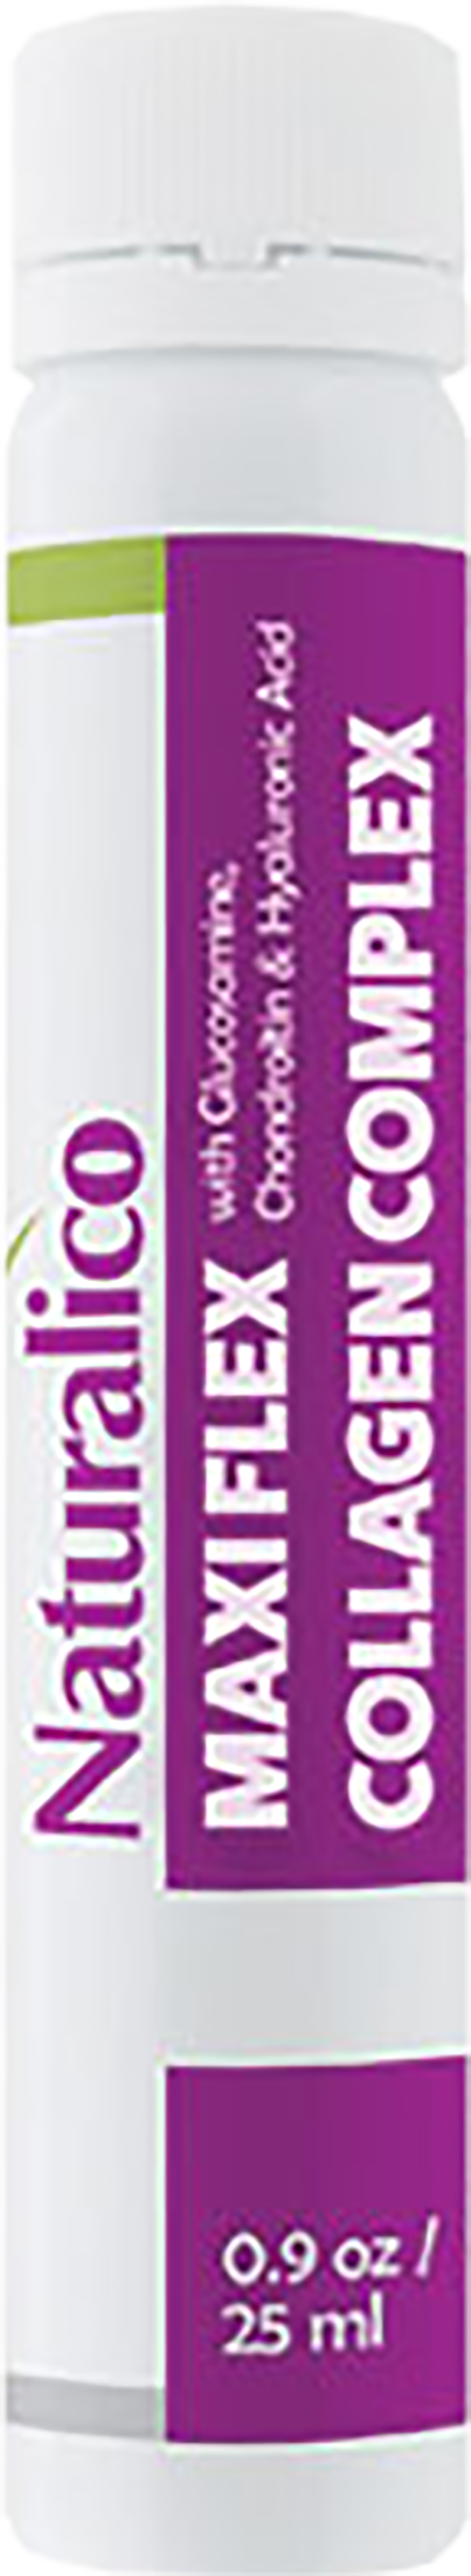 Maxiflex Ultra Collagen Complex - 